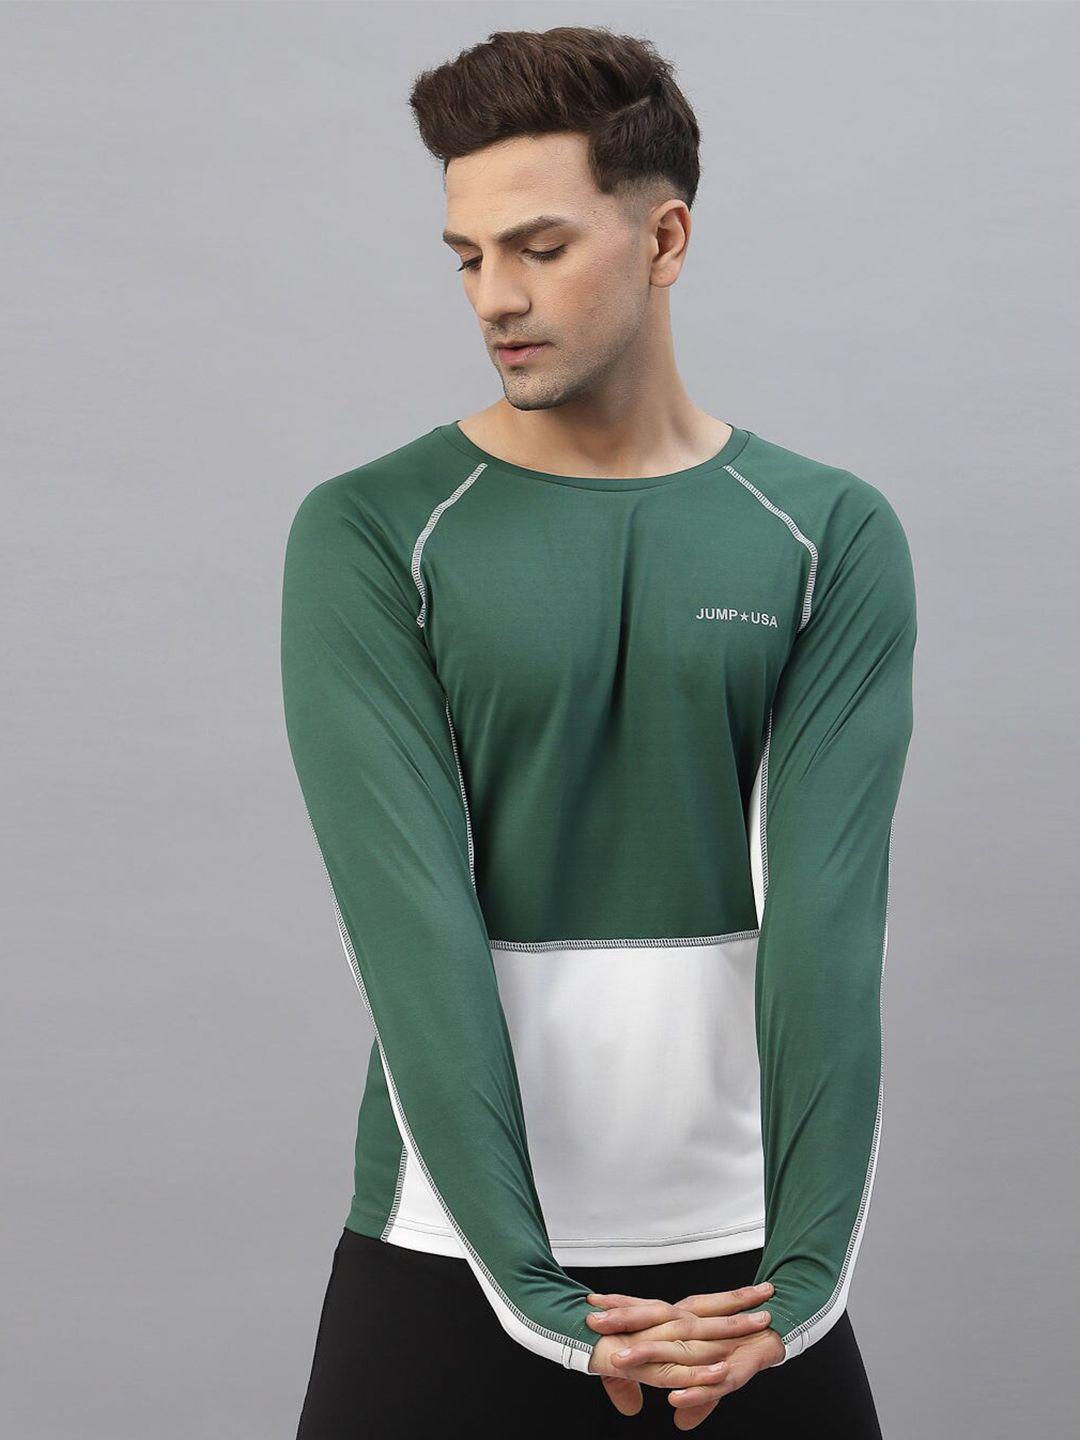 jump usa colourblocked raglan sleeve rapid-dry sports t-shirt